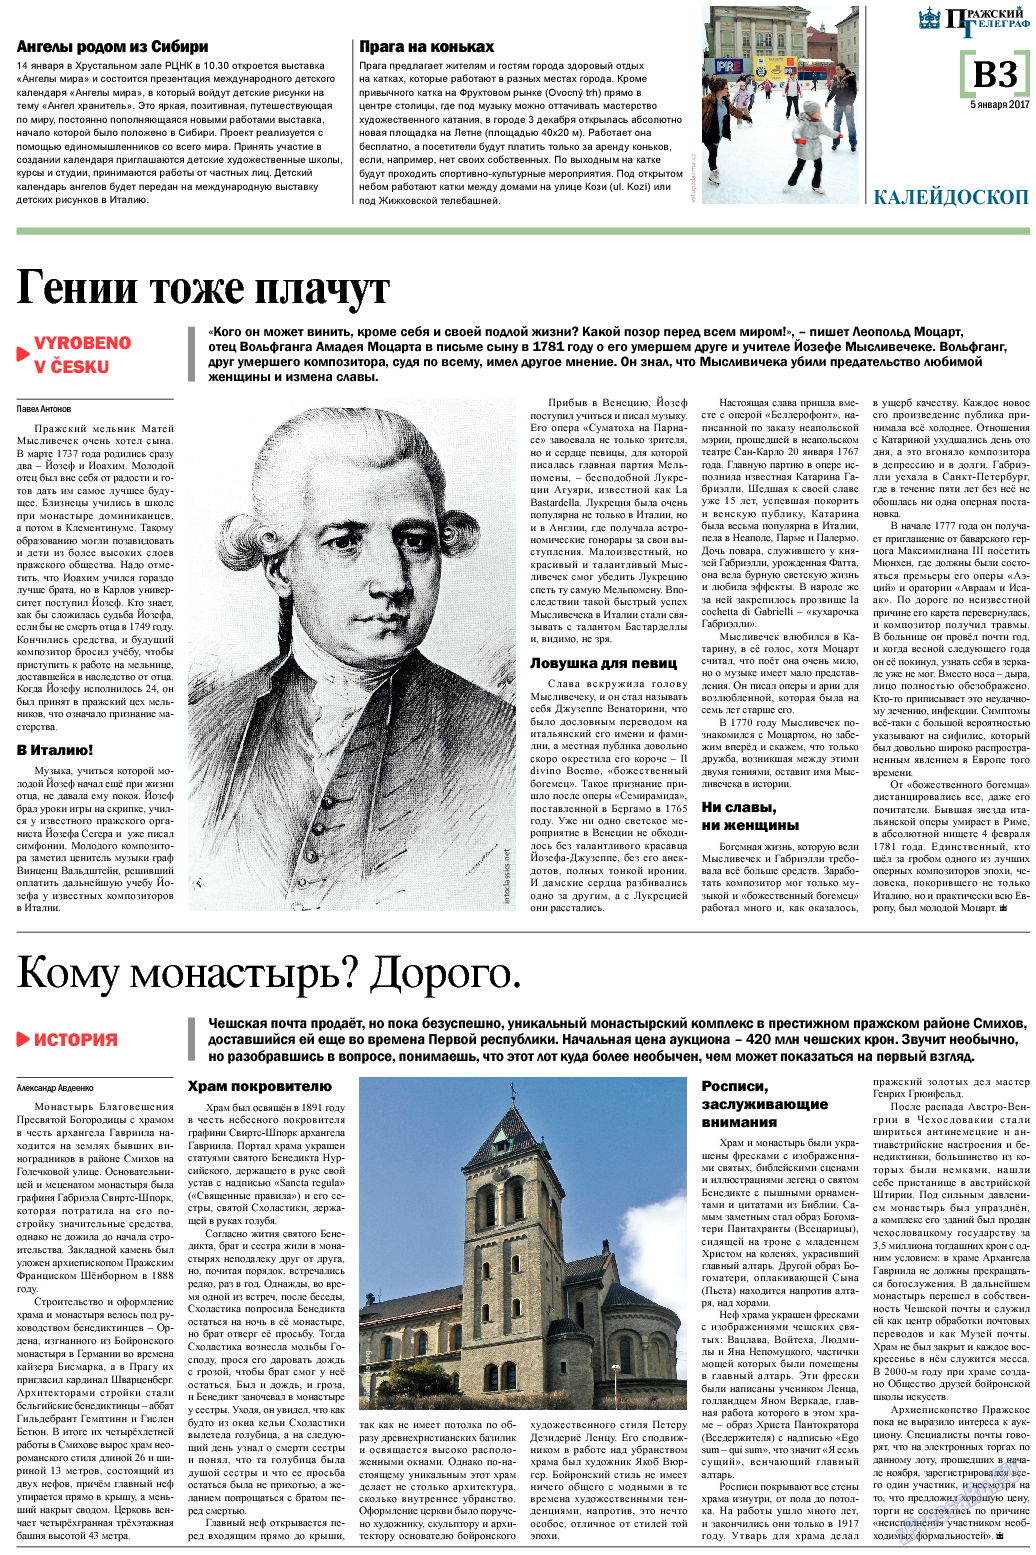 Пражский телеграф, газета. 2017 №1 стр.11